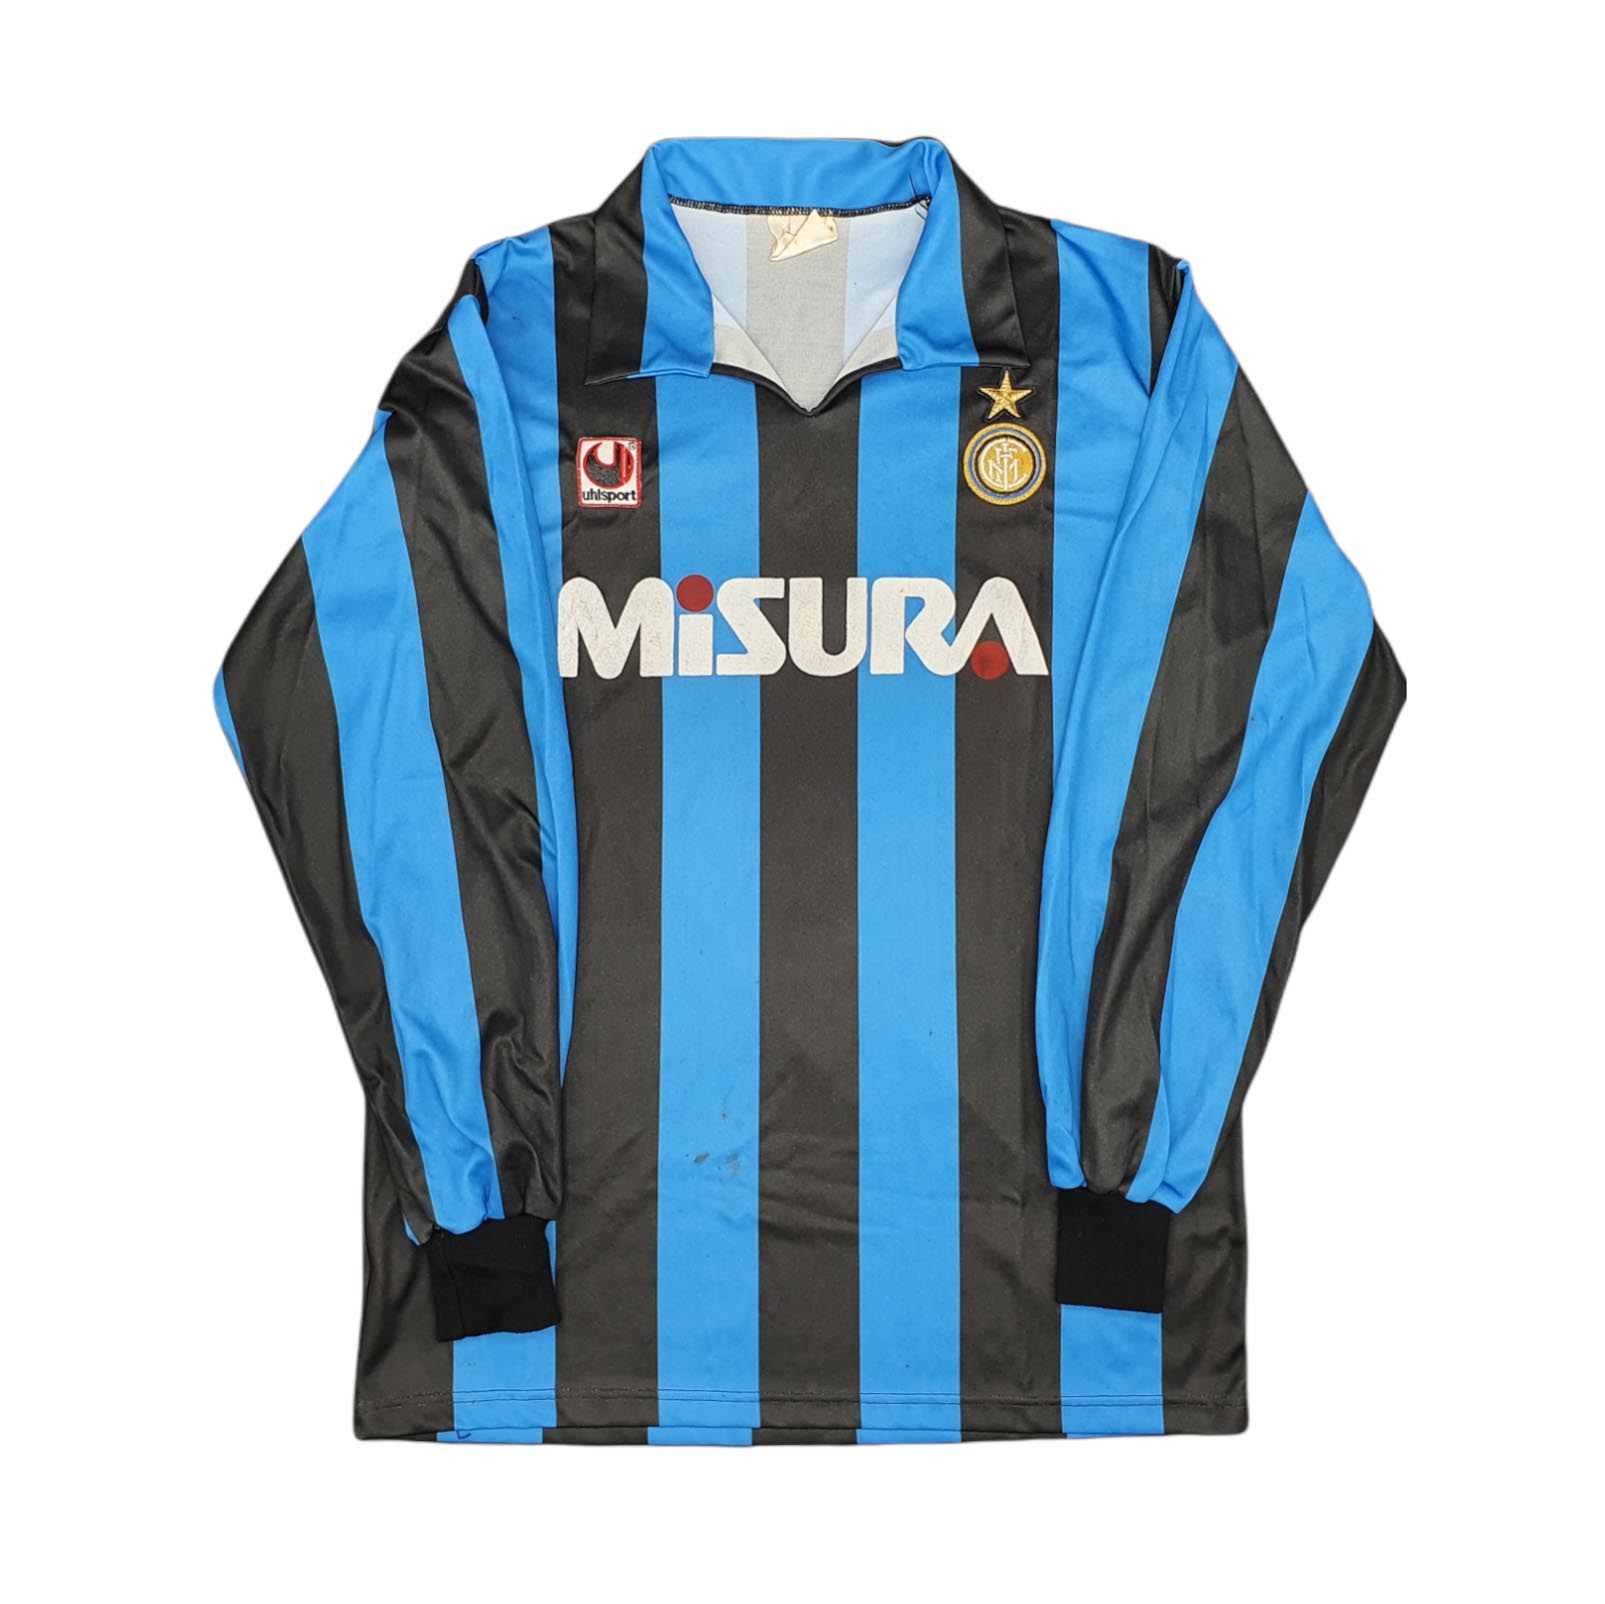 INTER 1990-91 "MATTEO" maglia di casa "XL" Uhlsport "demokratischen" shirt calcio maglia 